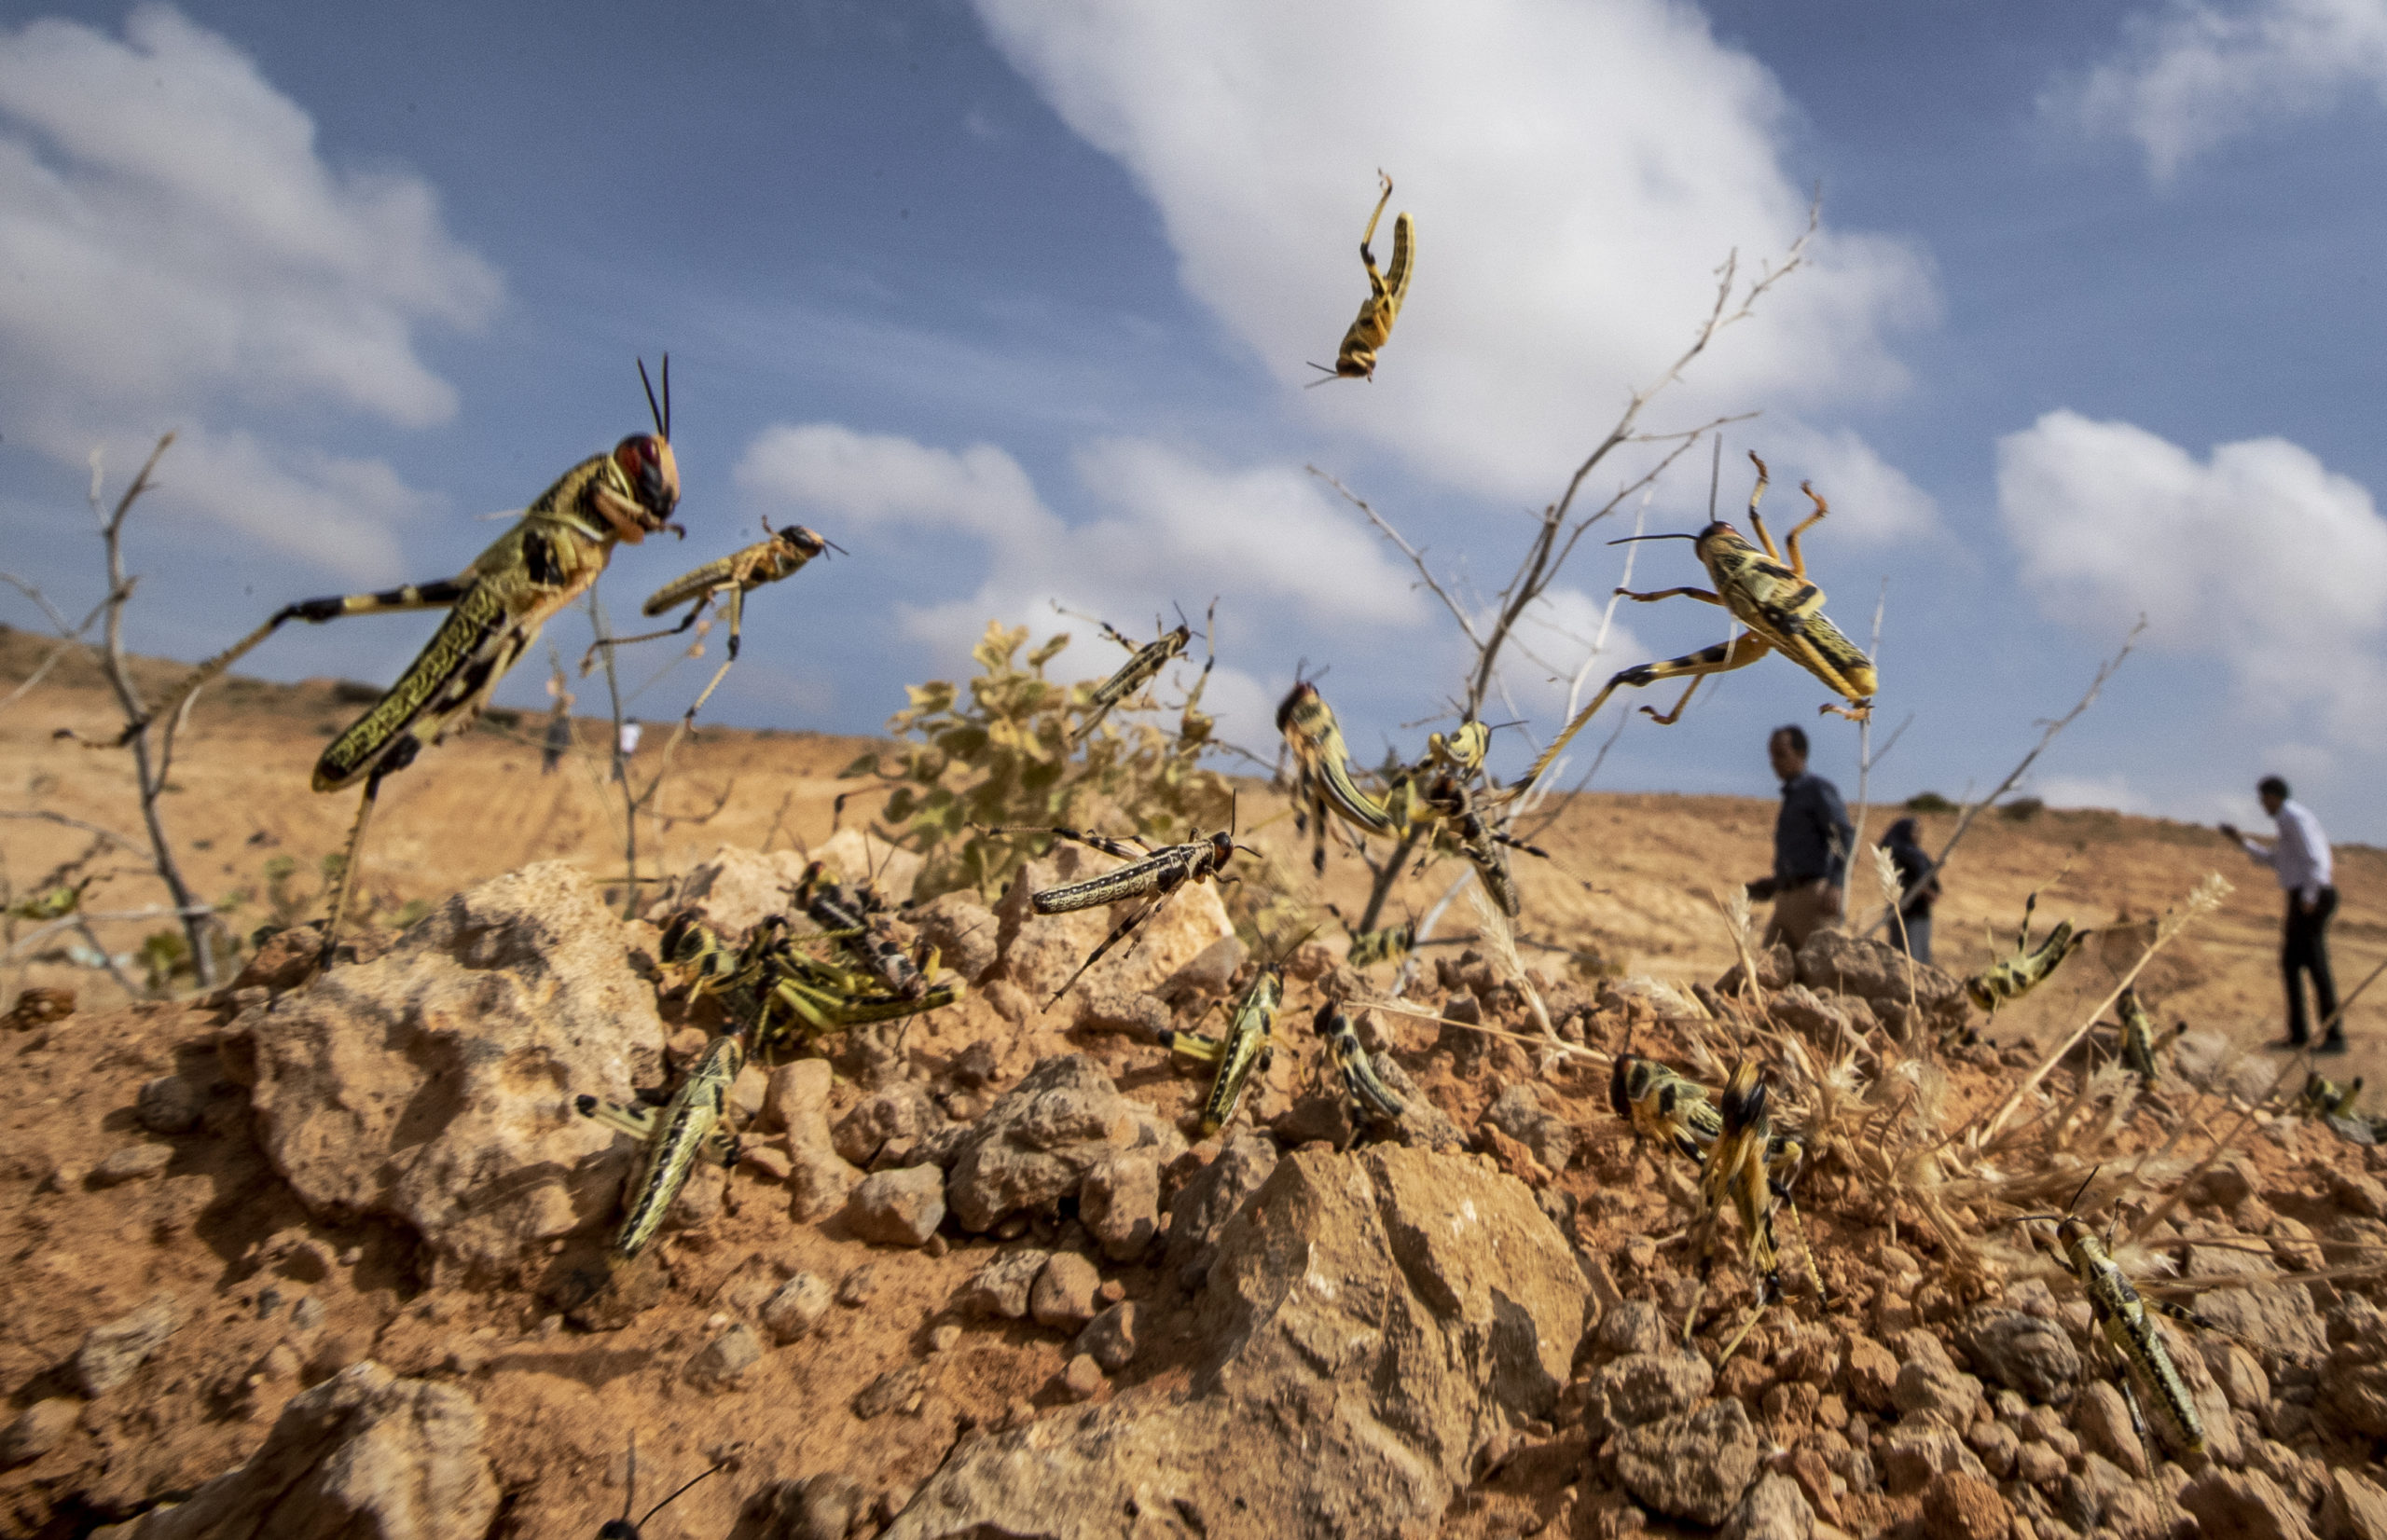 Immature desert locusts in Somalia on February 5, 2020. (Image: Ben Curtis, AP)